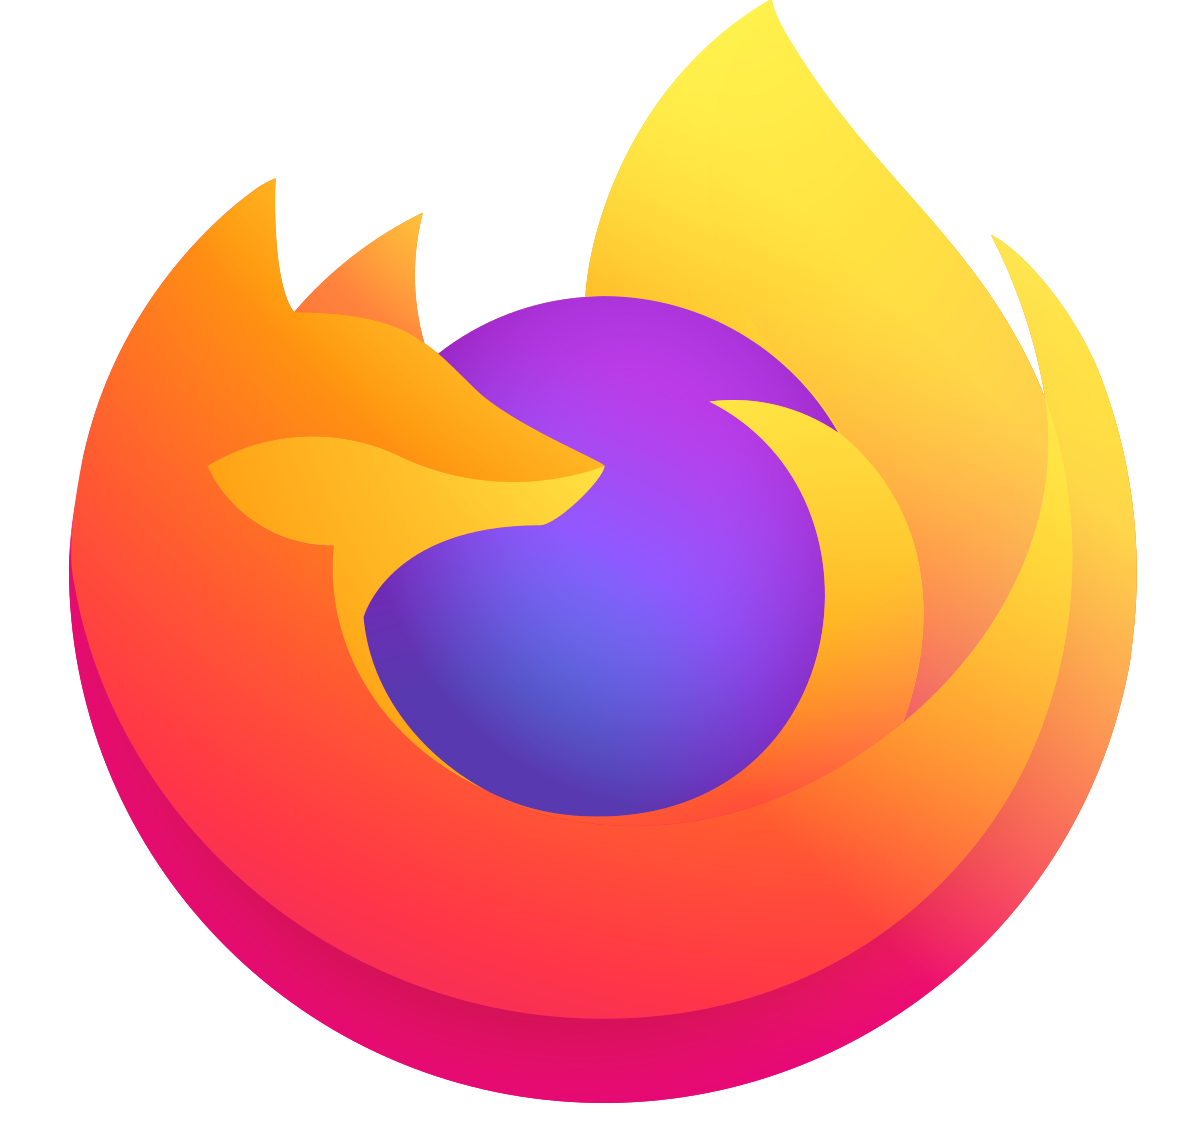 Браузер Мозила Фаерфокс / Mozilla Firefox 119.0 Последняя версия для Windows